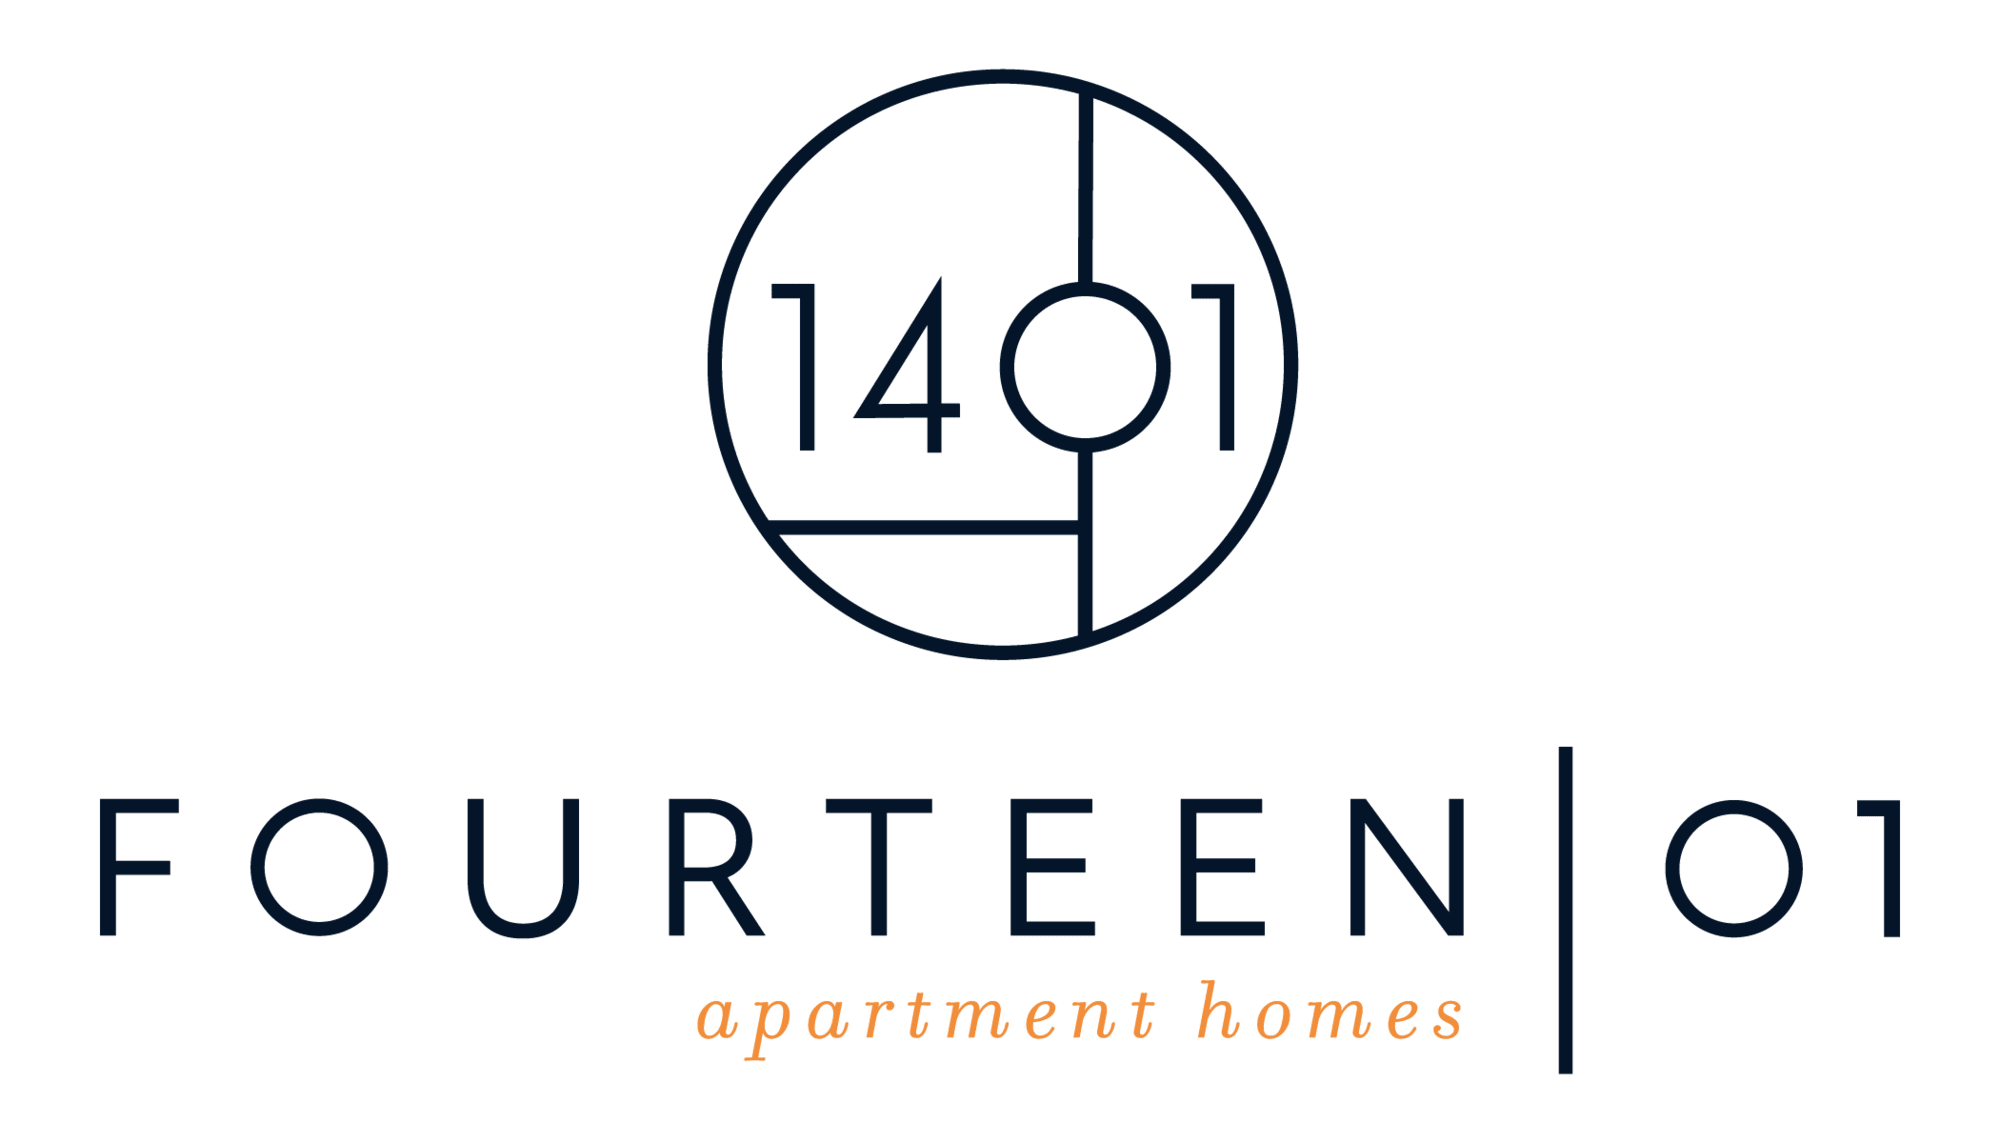 Fourteen01 Apartments